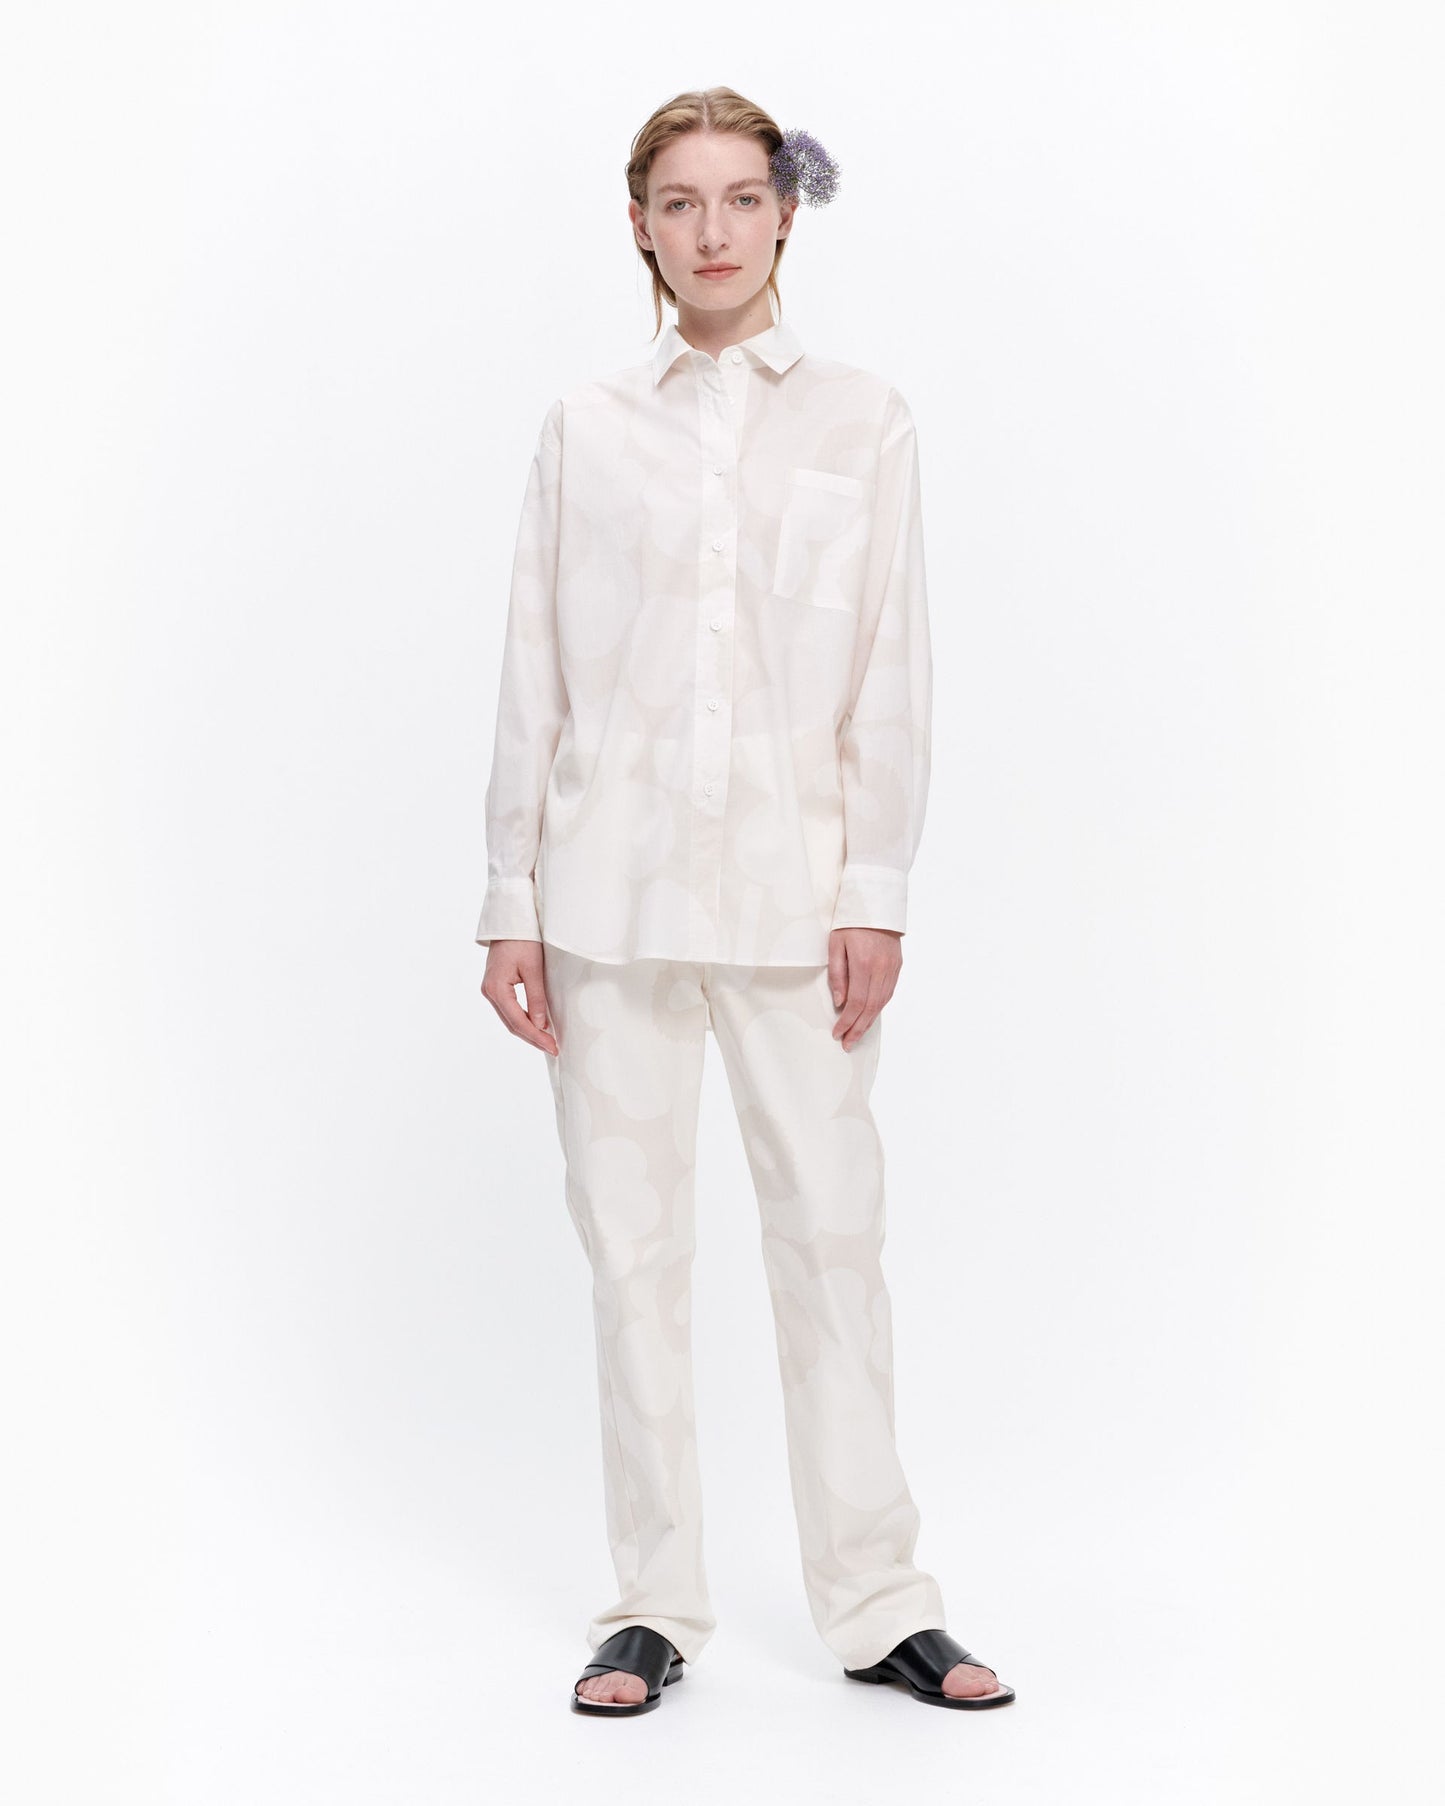 Marimekko Kasvio button-up shirt is made of a light, thin cotton in the beige and off white Unikko (poppy) pattern